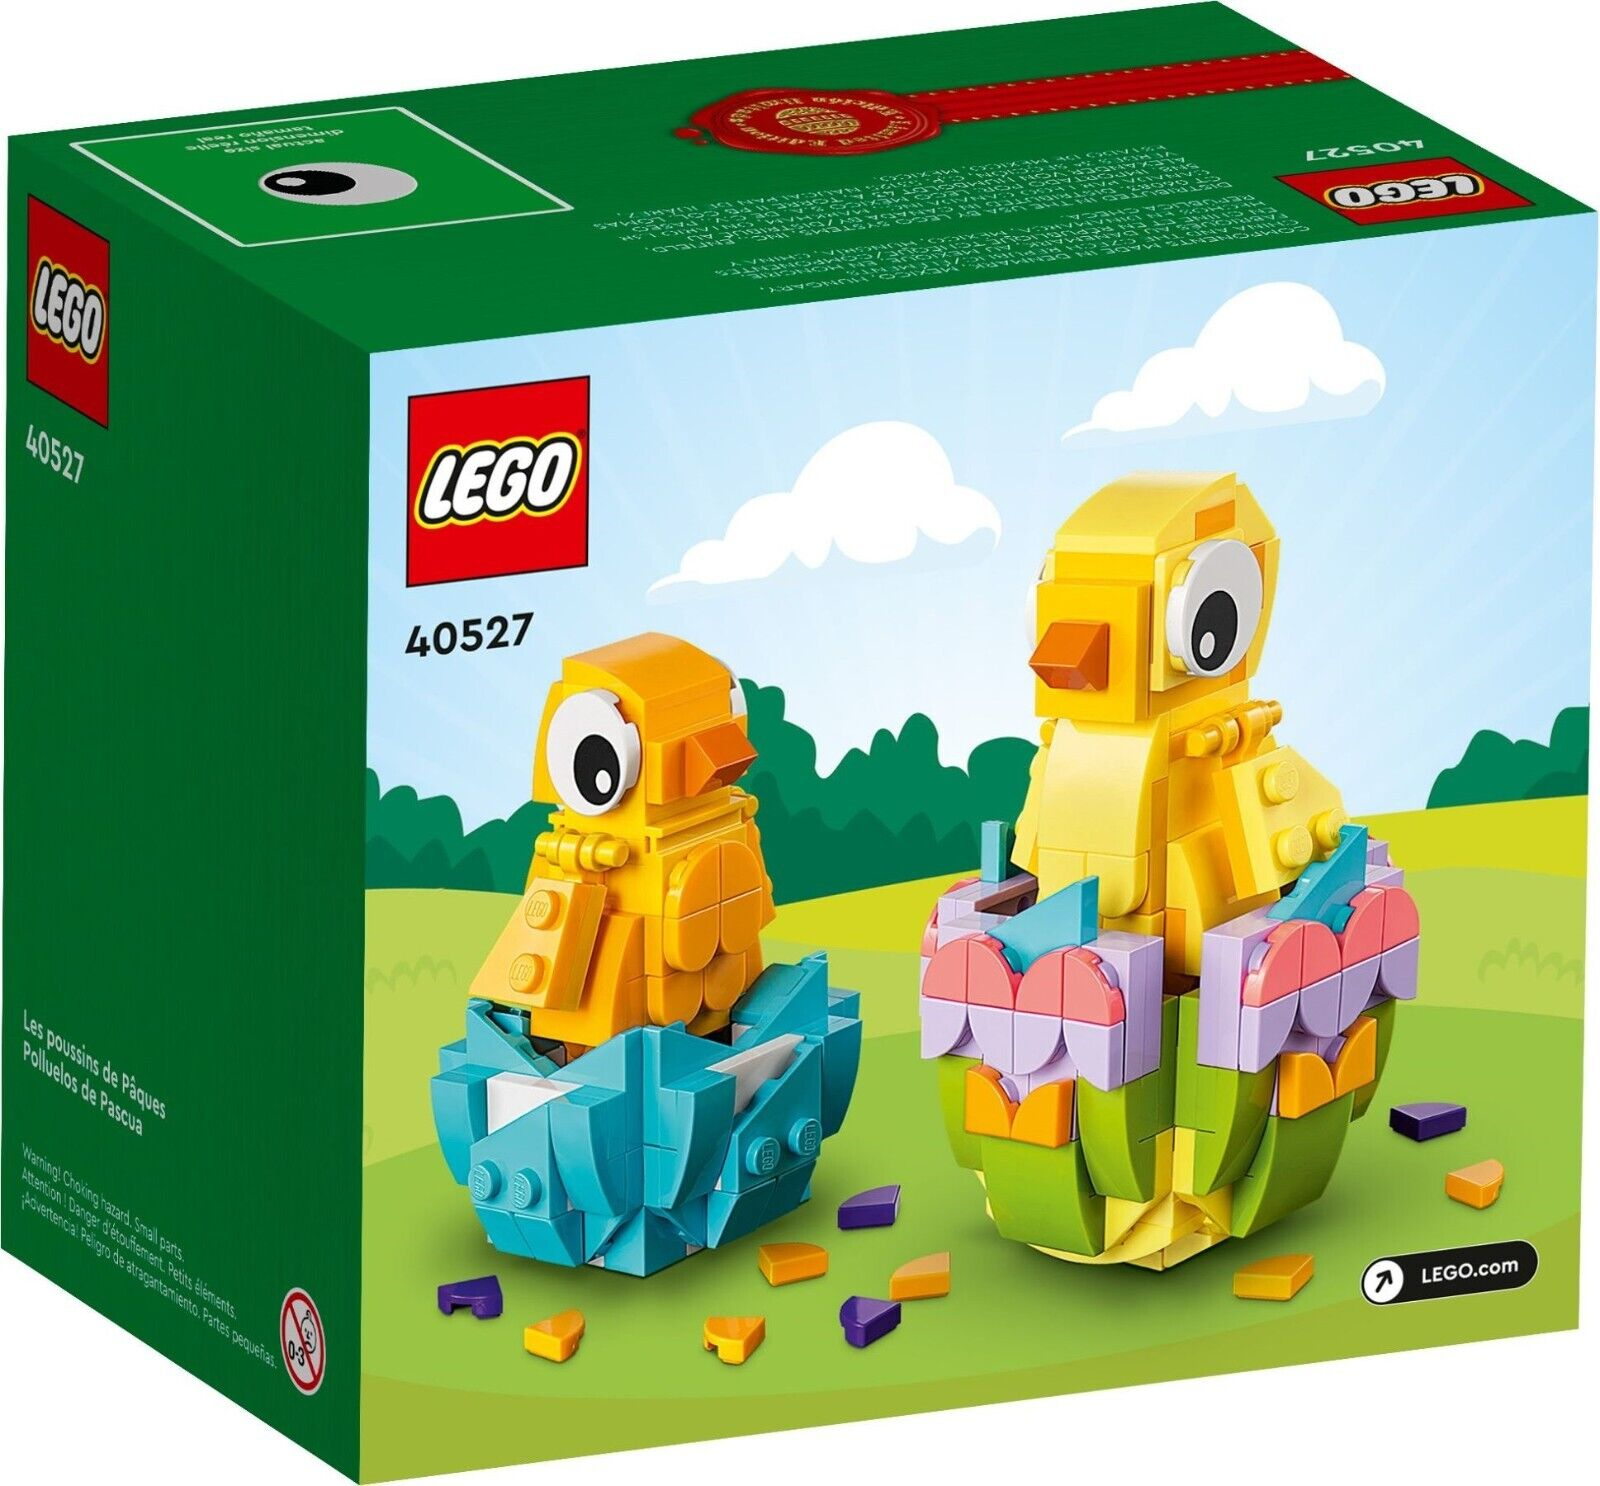 und Osterkueken - OVP NEU 318x Bausatz 40527 Ostern Teile LEGO Set NEU!